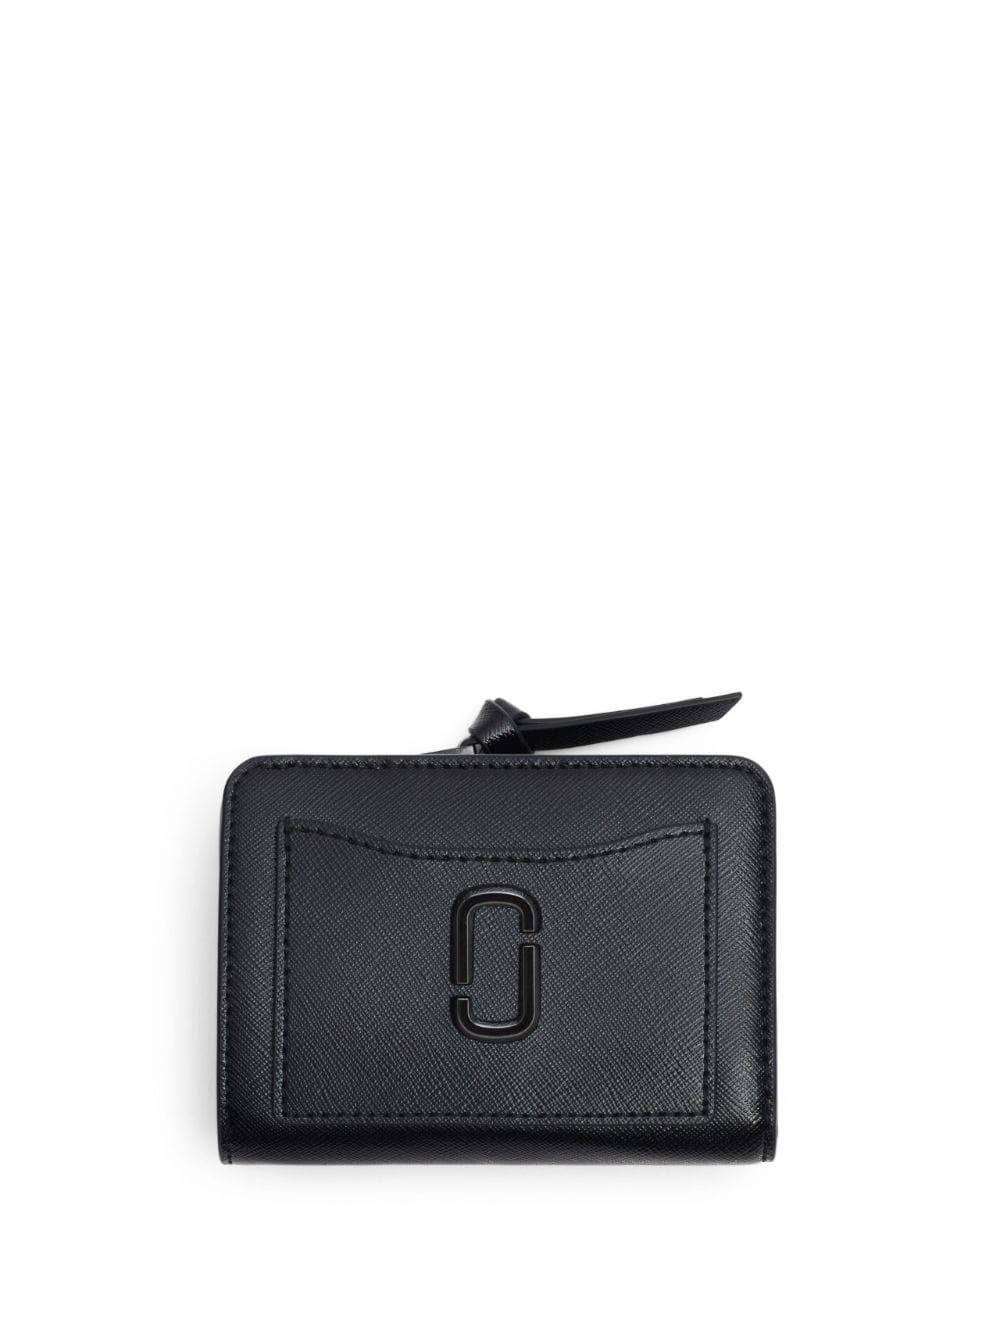 Marc Jacobs Snapshot Dtm Compact Wallet in Black